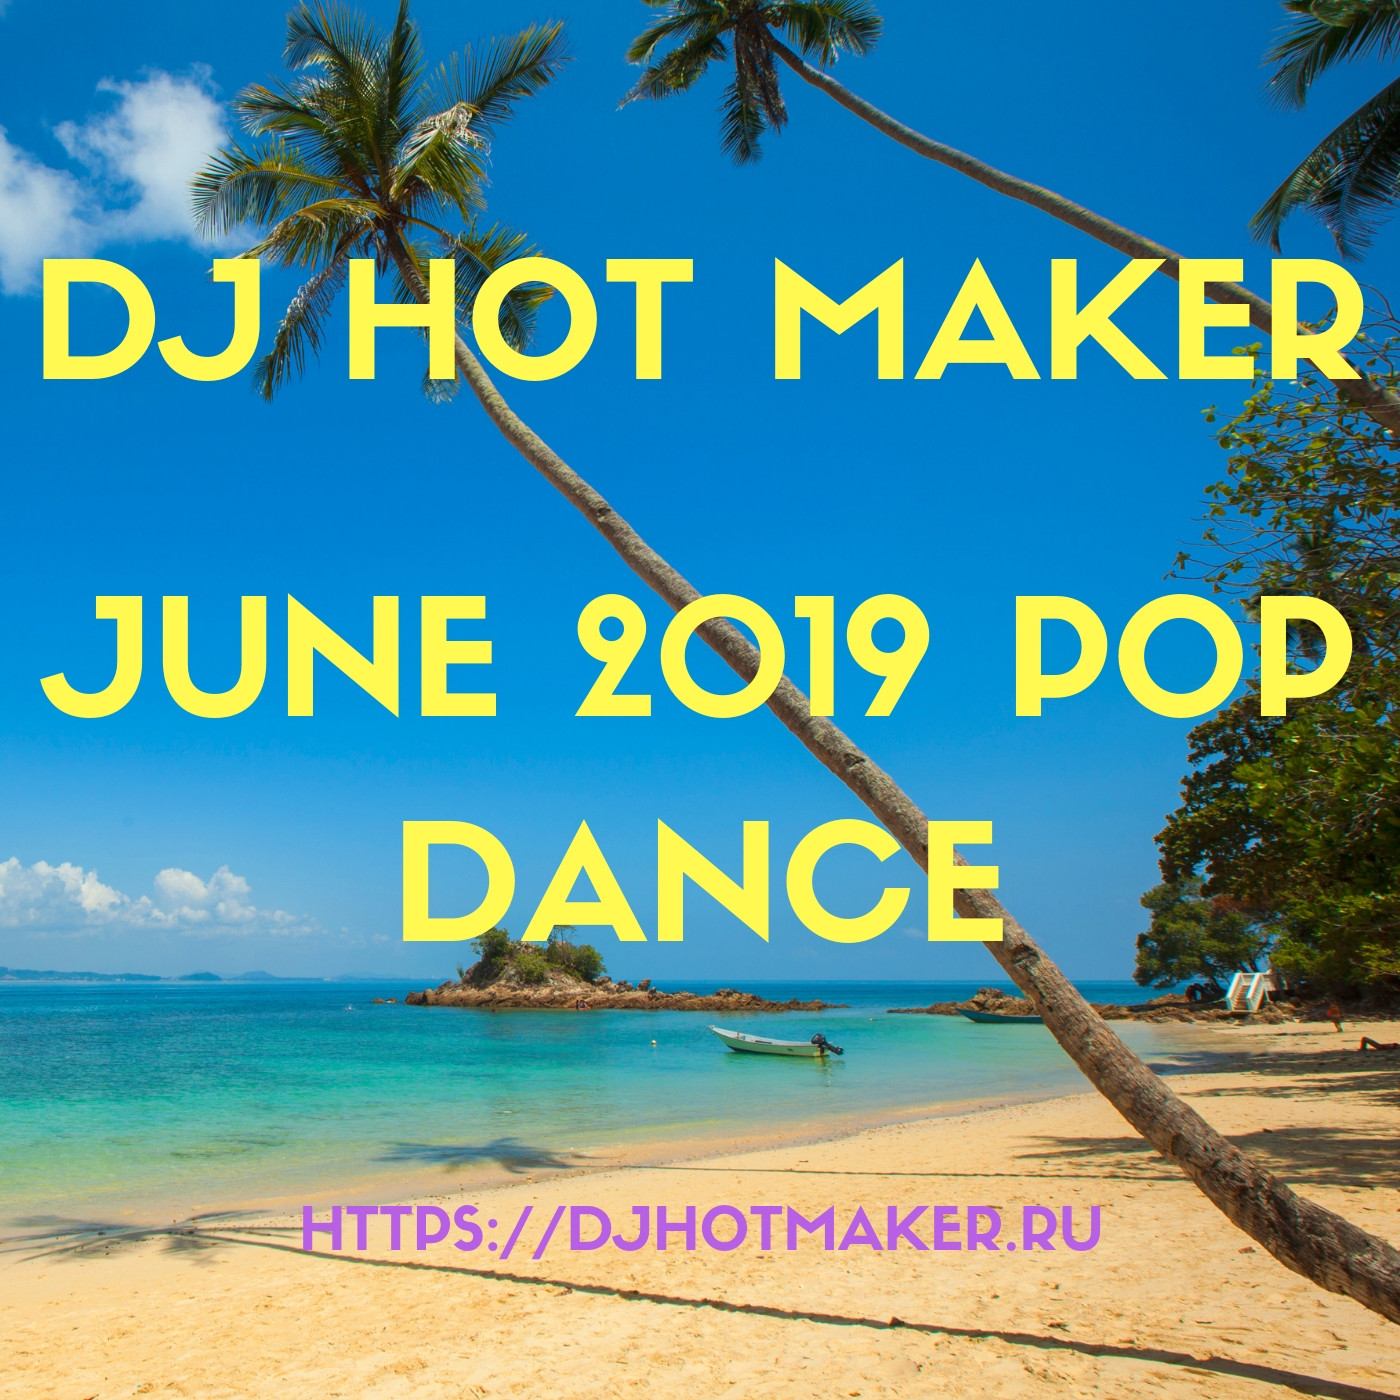 DJ Hot Maker - June 2019 Pop Dance Promo